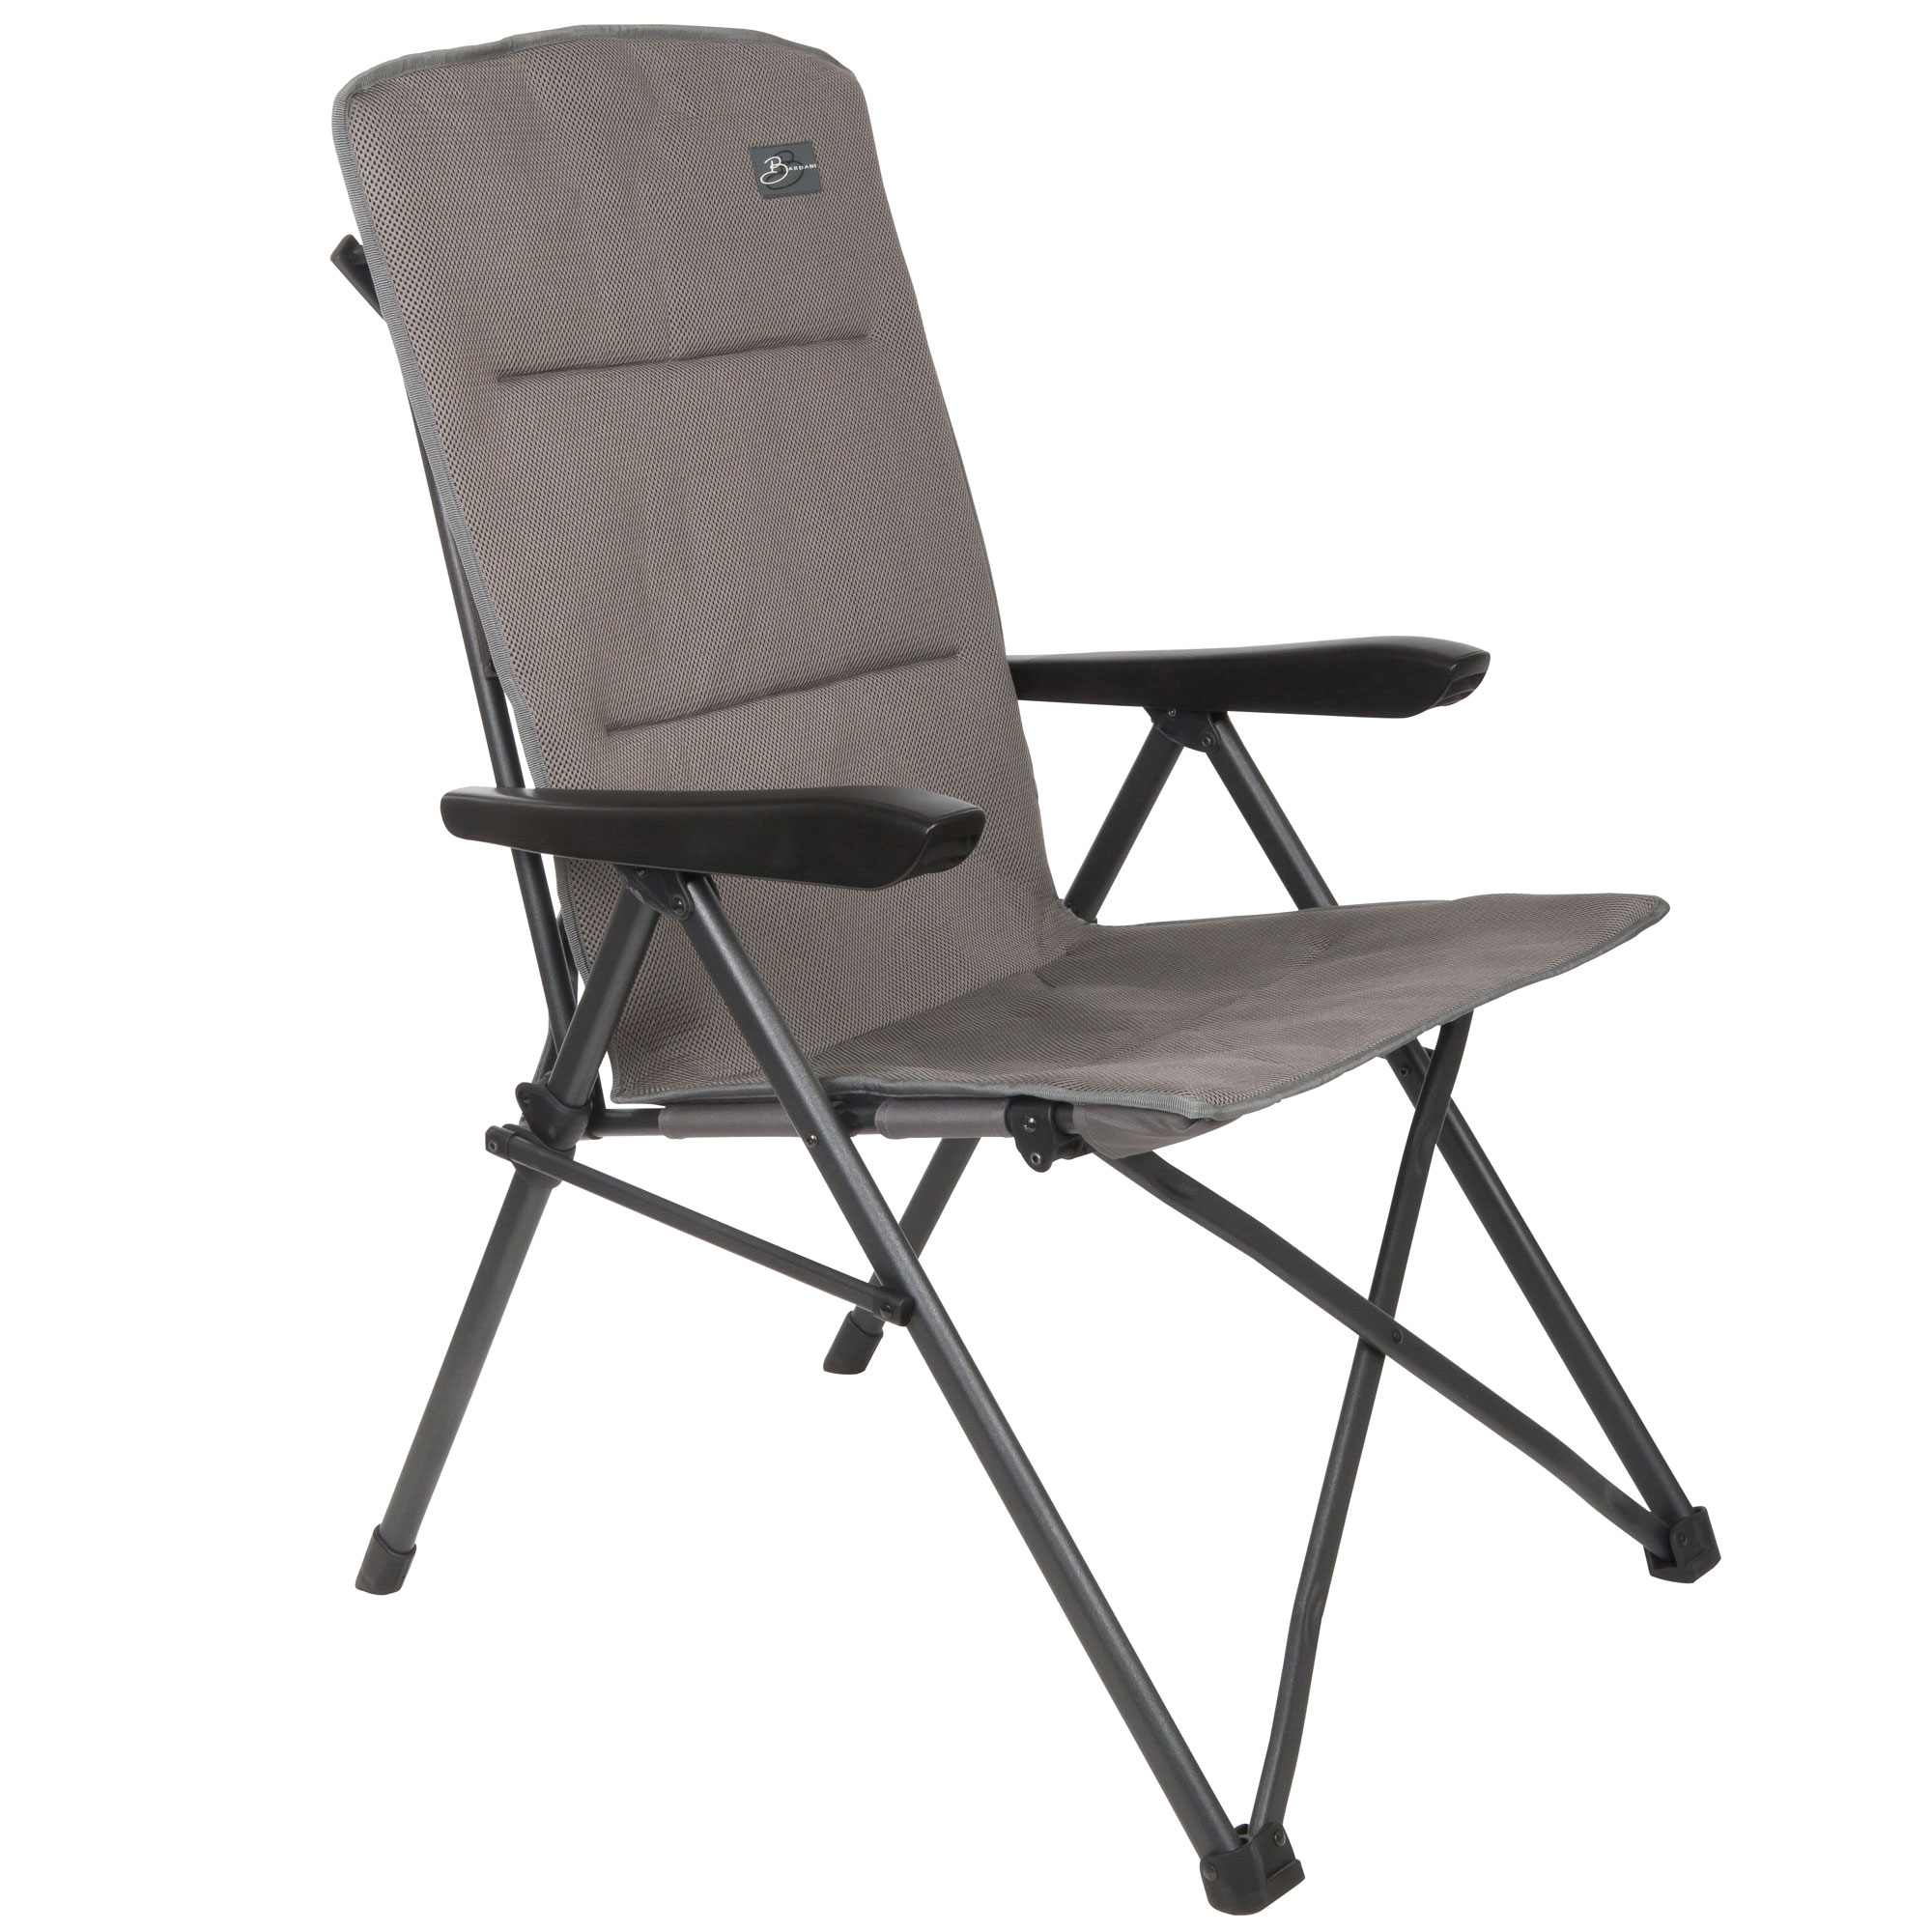 Afscheiden omdraaien Pickering Bardani Monschau 3D Comfort campingstoel platina grey